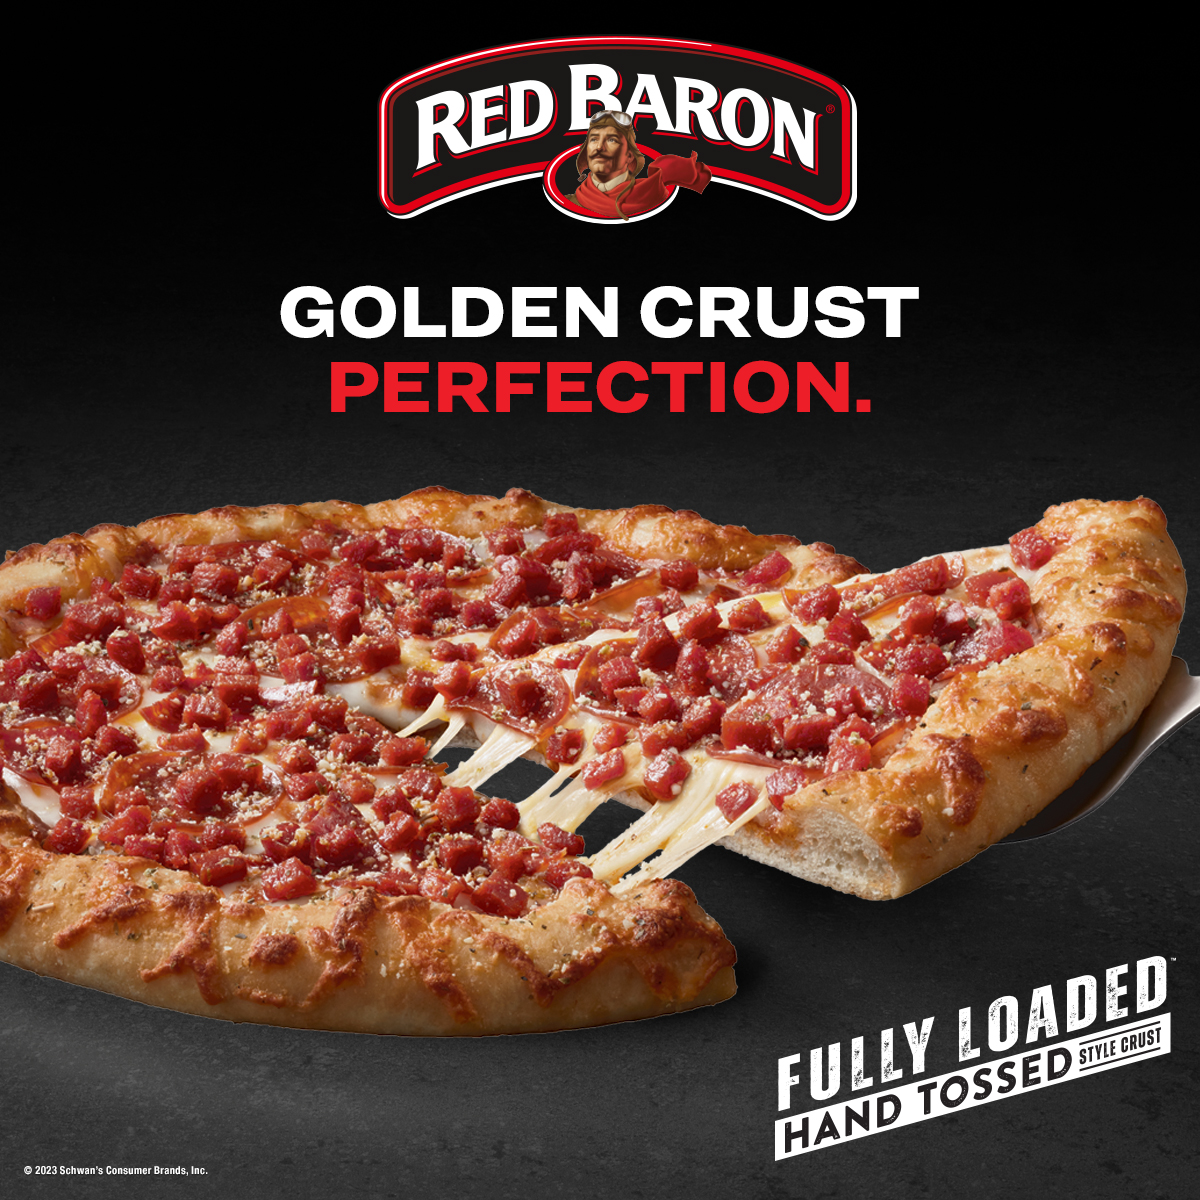 Golden Crust Perfection